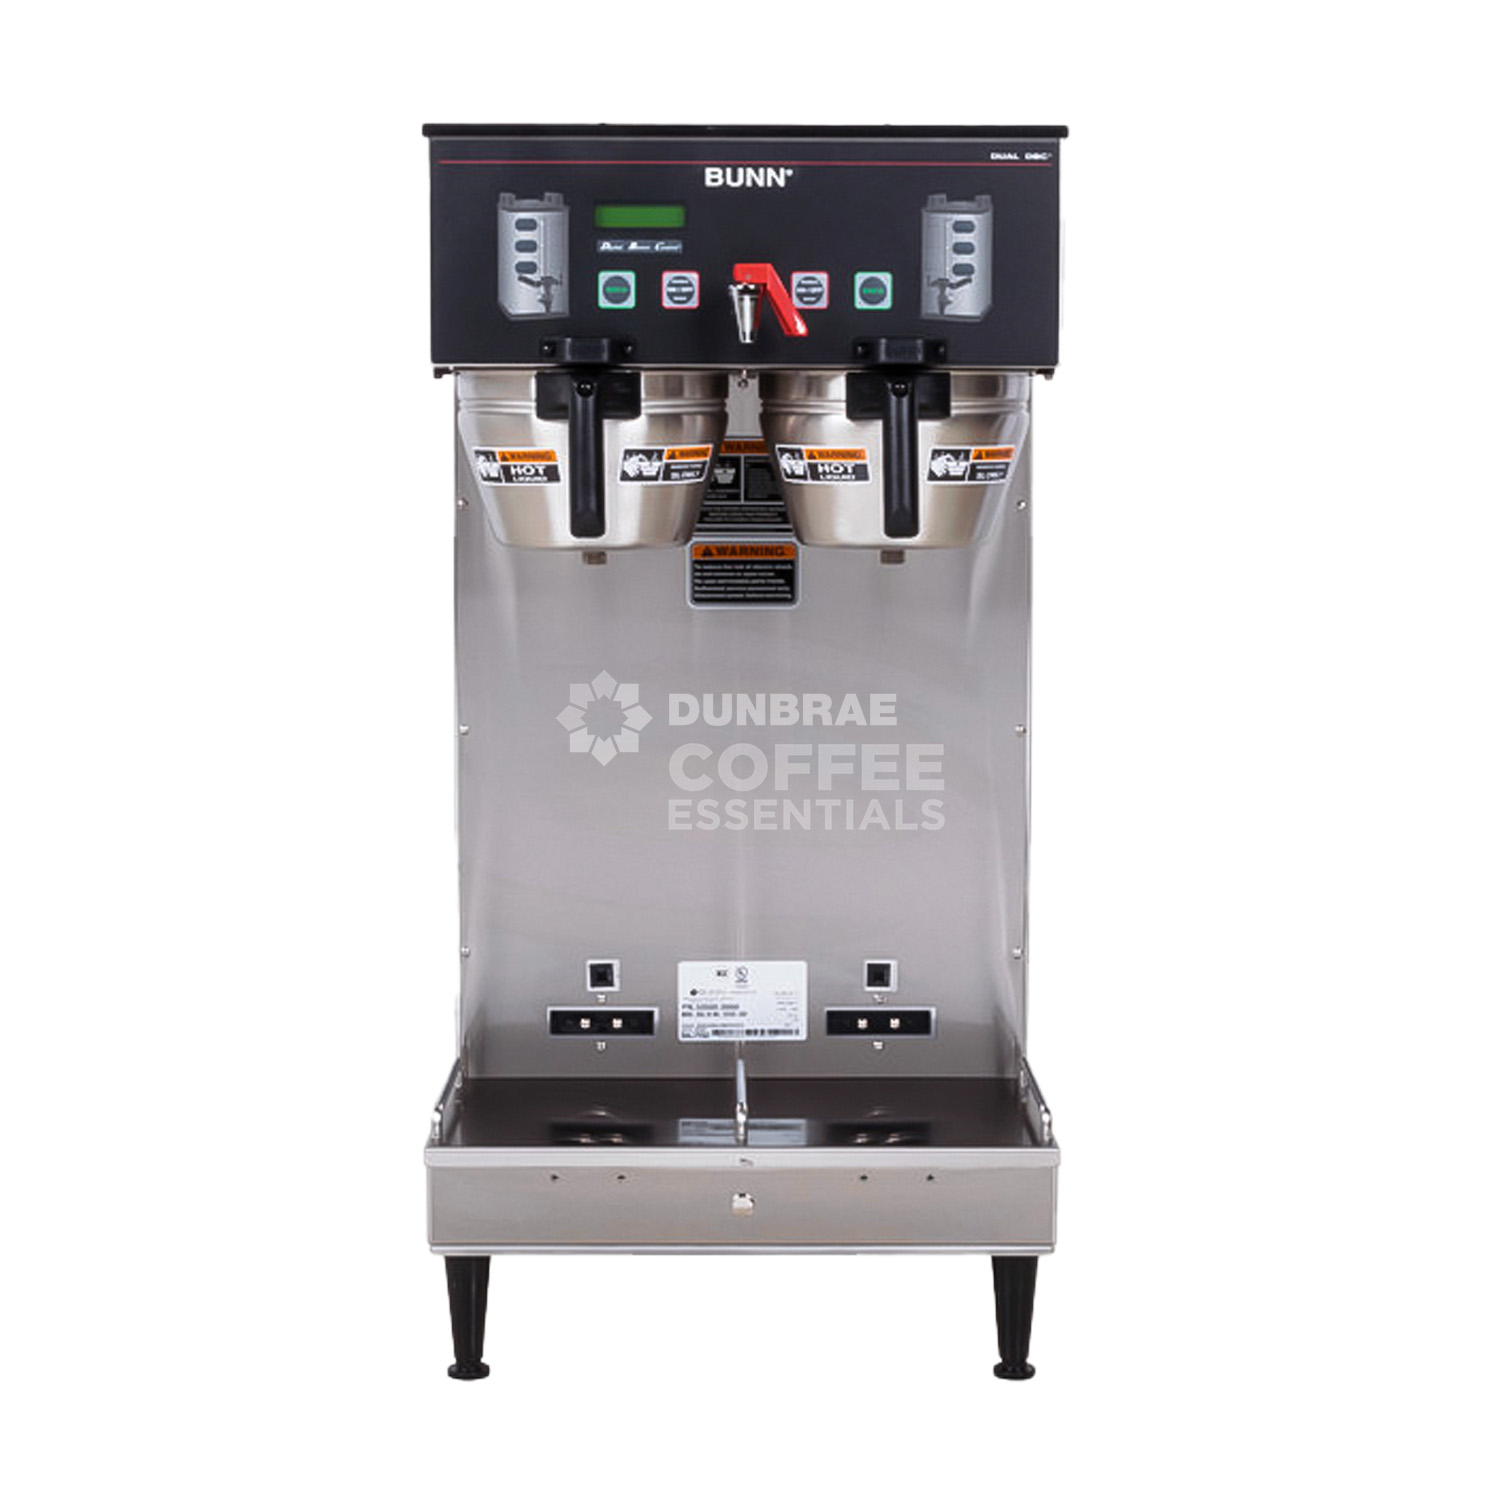 Dunbrae Coffee Essentials